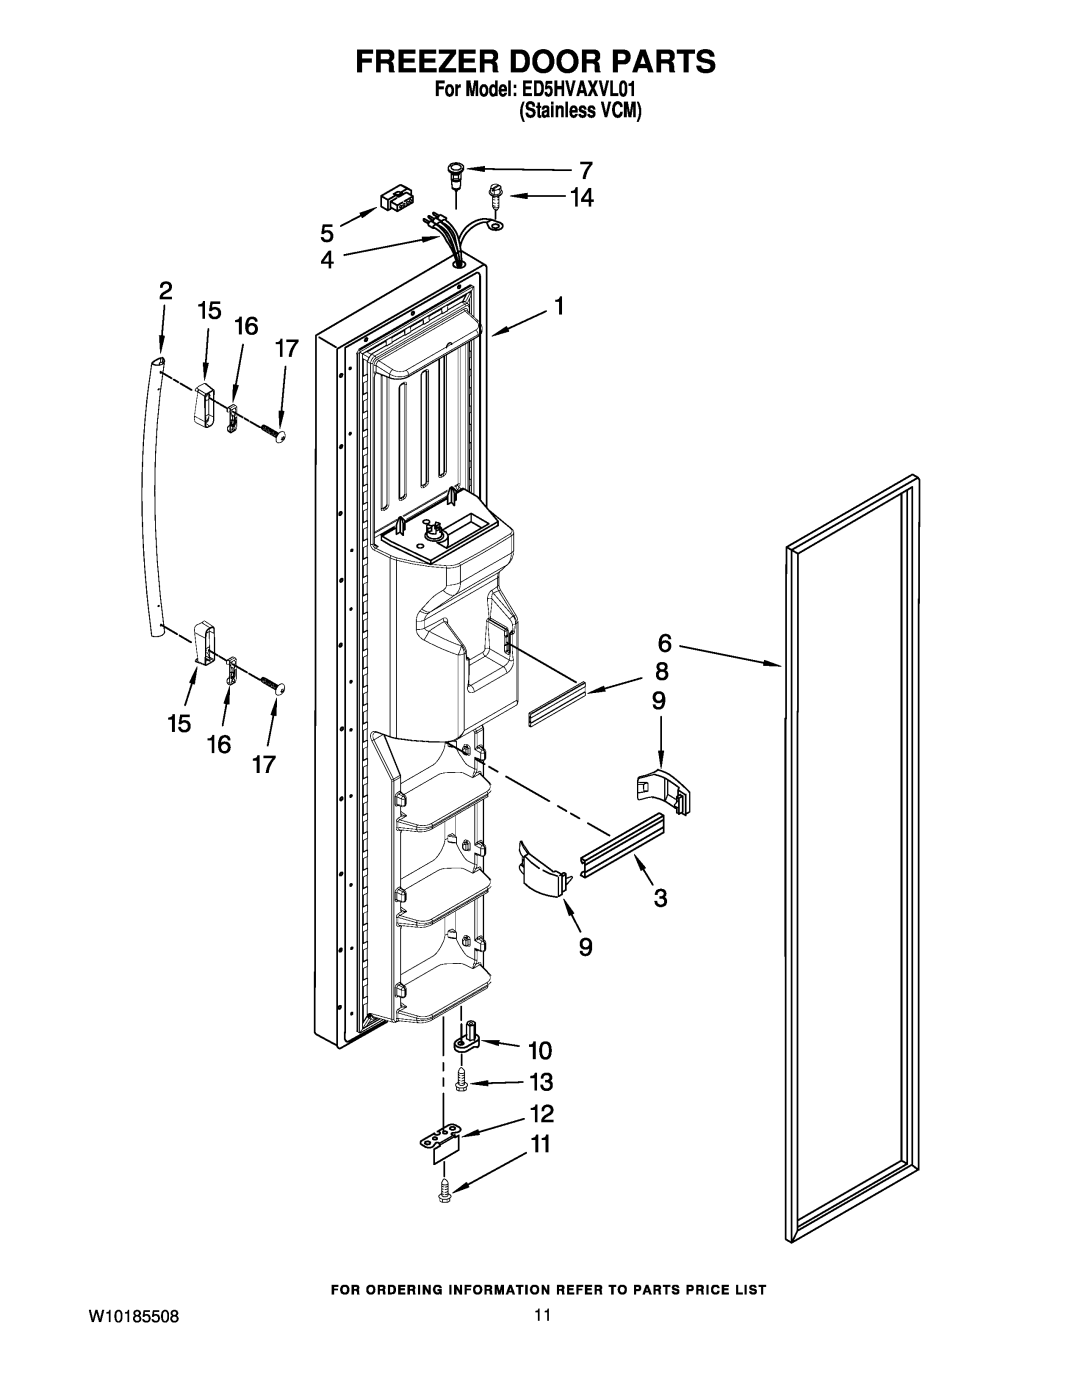 Whirlpool manual Freezer Door Parts, W10185508, For Model ED5HVAXVL01 Stainless VCM 